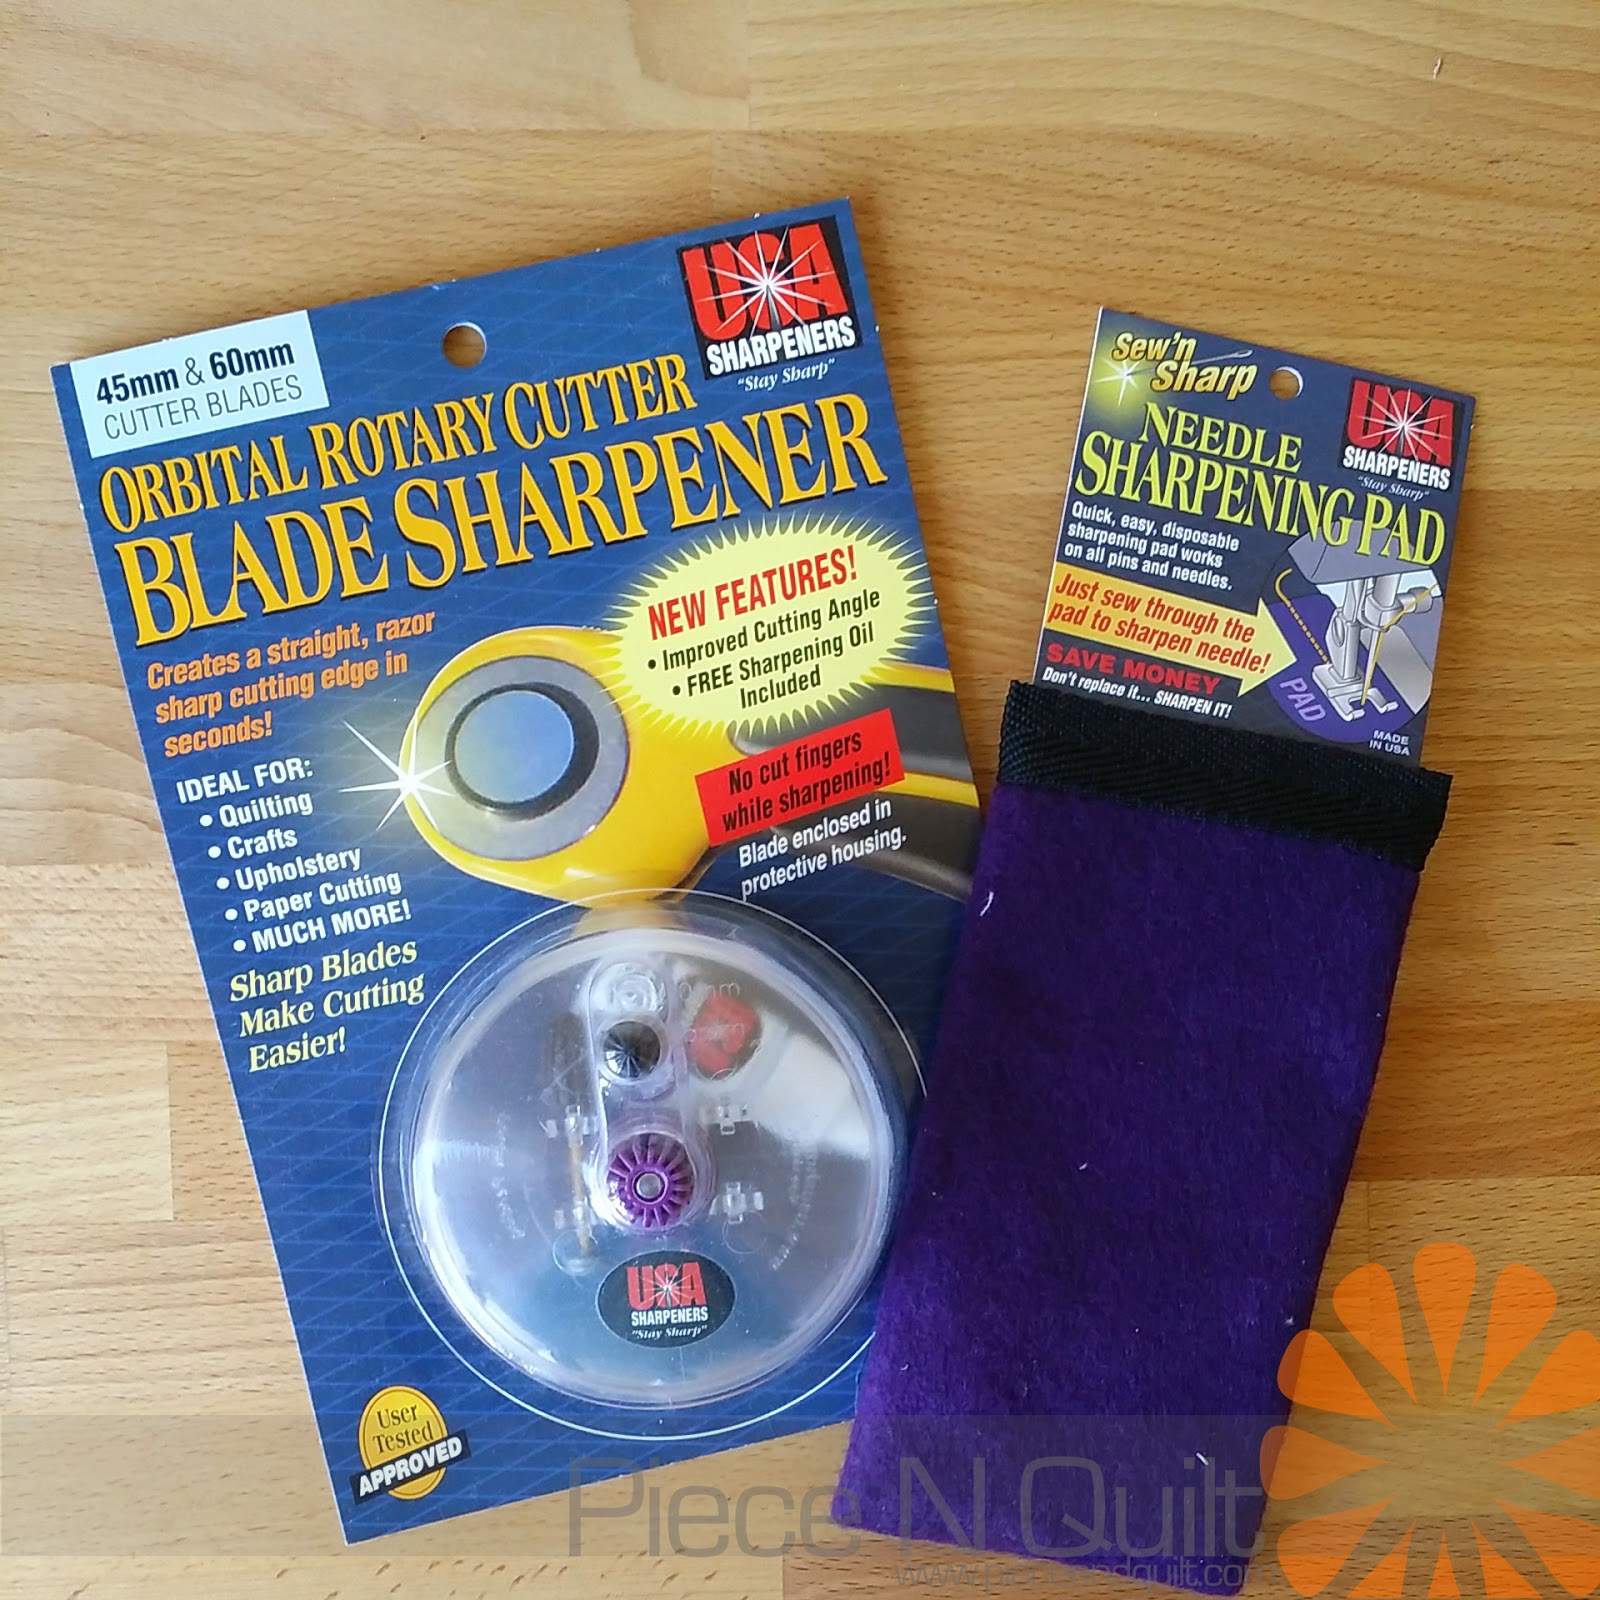 Piece N Quilt: Orbital Rotarty Blade Sharpener & Needle Sharpener - Product  Review